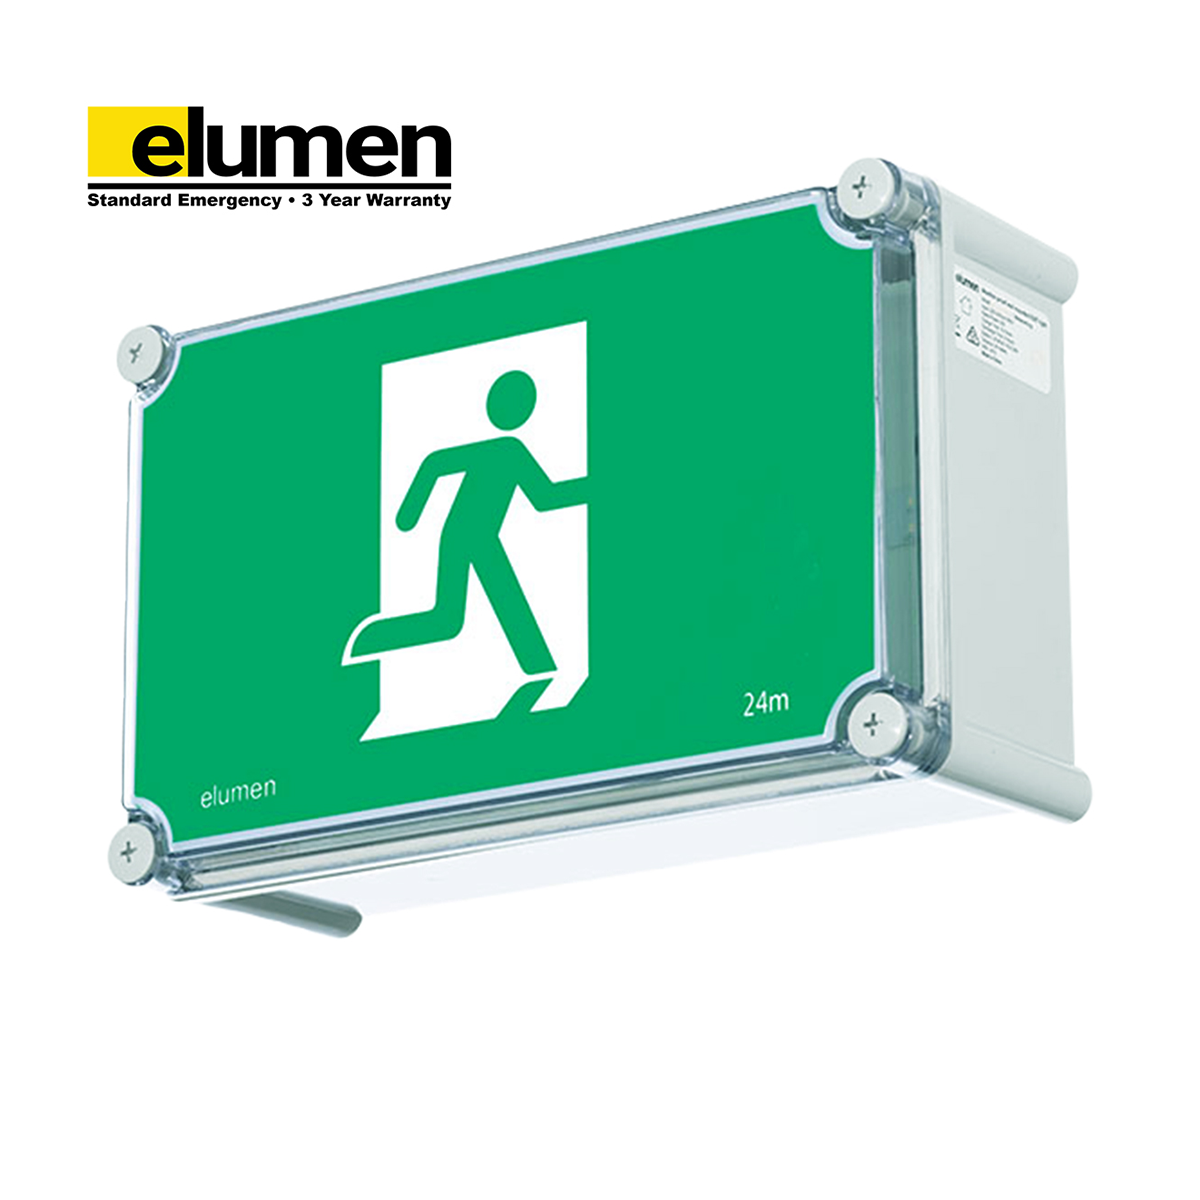 LED IP65 Exit Light - Emergency - Premium Exit & Emergency Lighting from elumen - Shop now at Firebox Australia